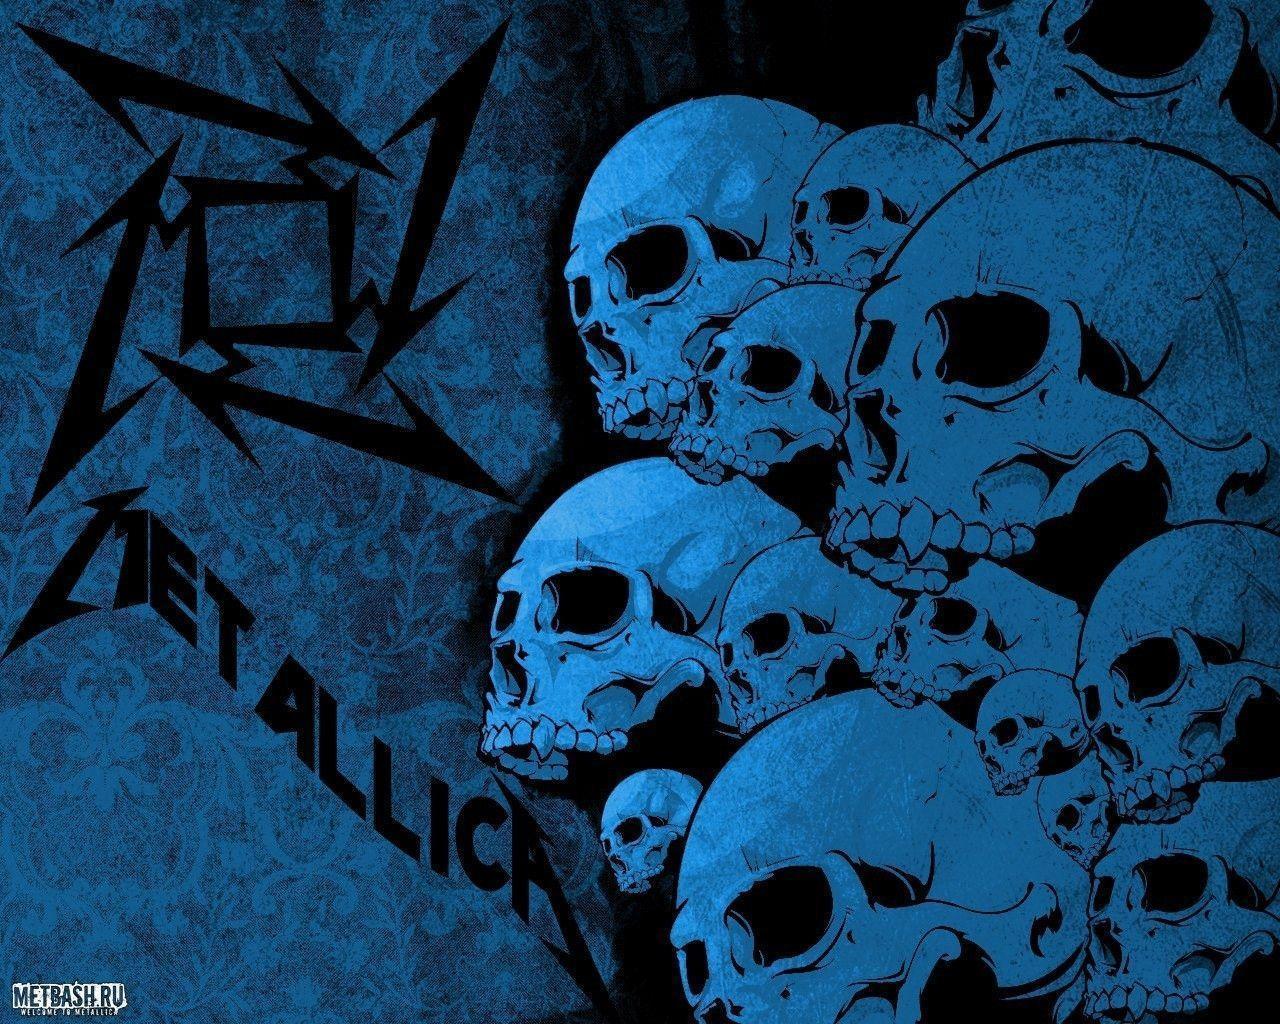 Metallica Logo Wallpapers - Wallpaper Cave